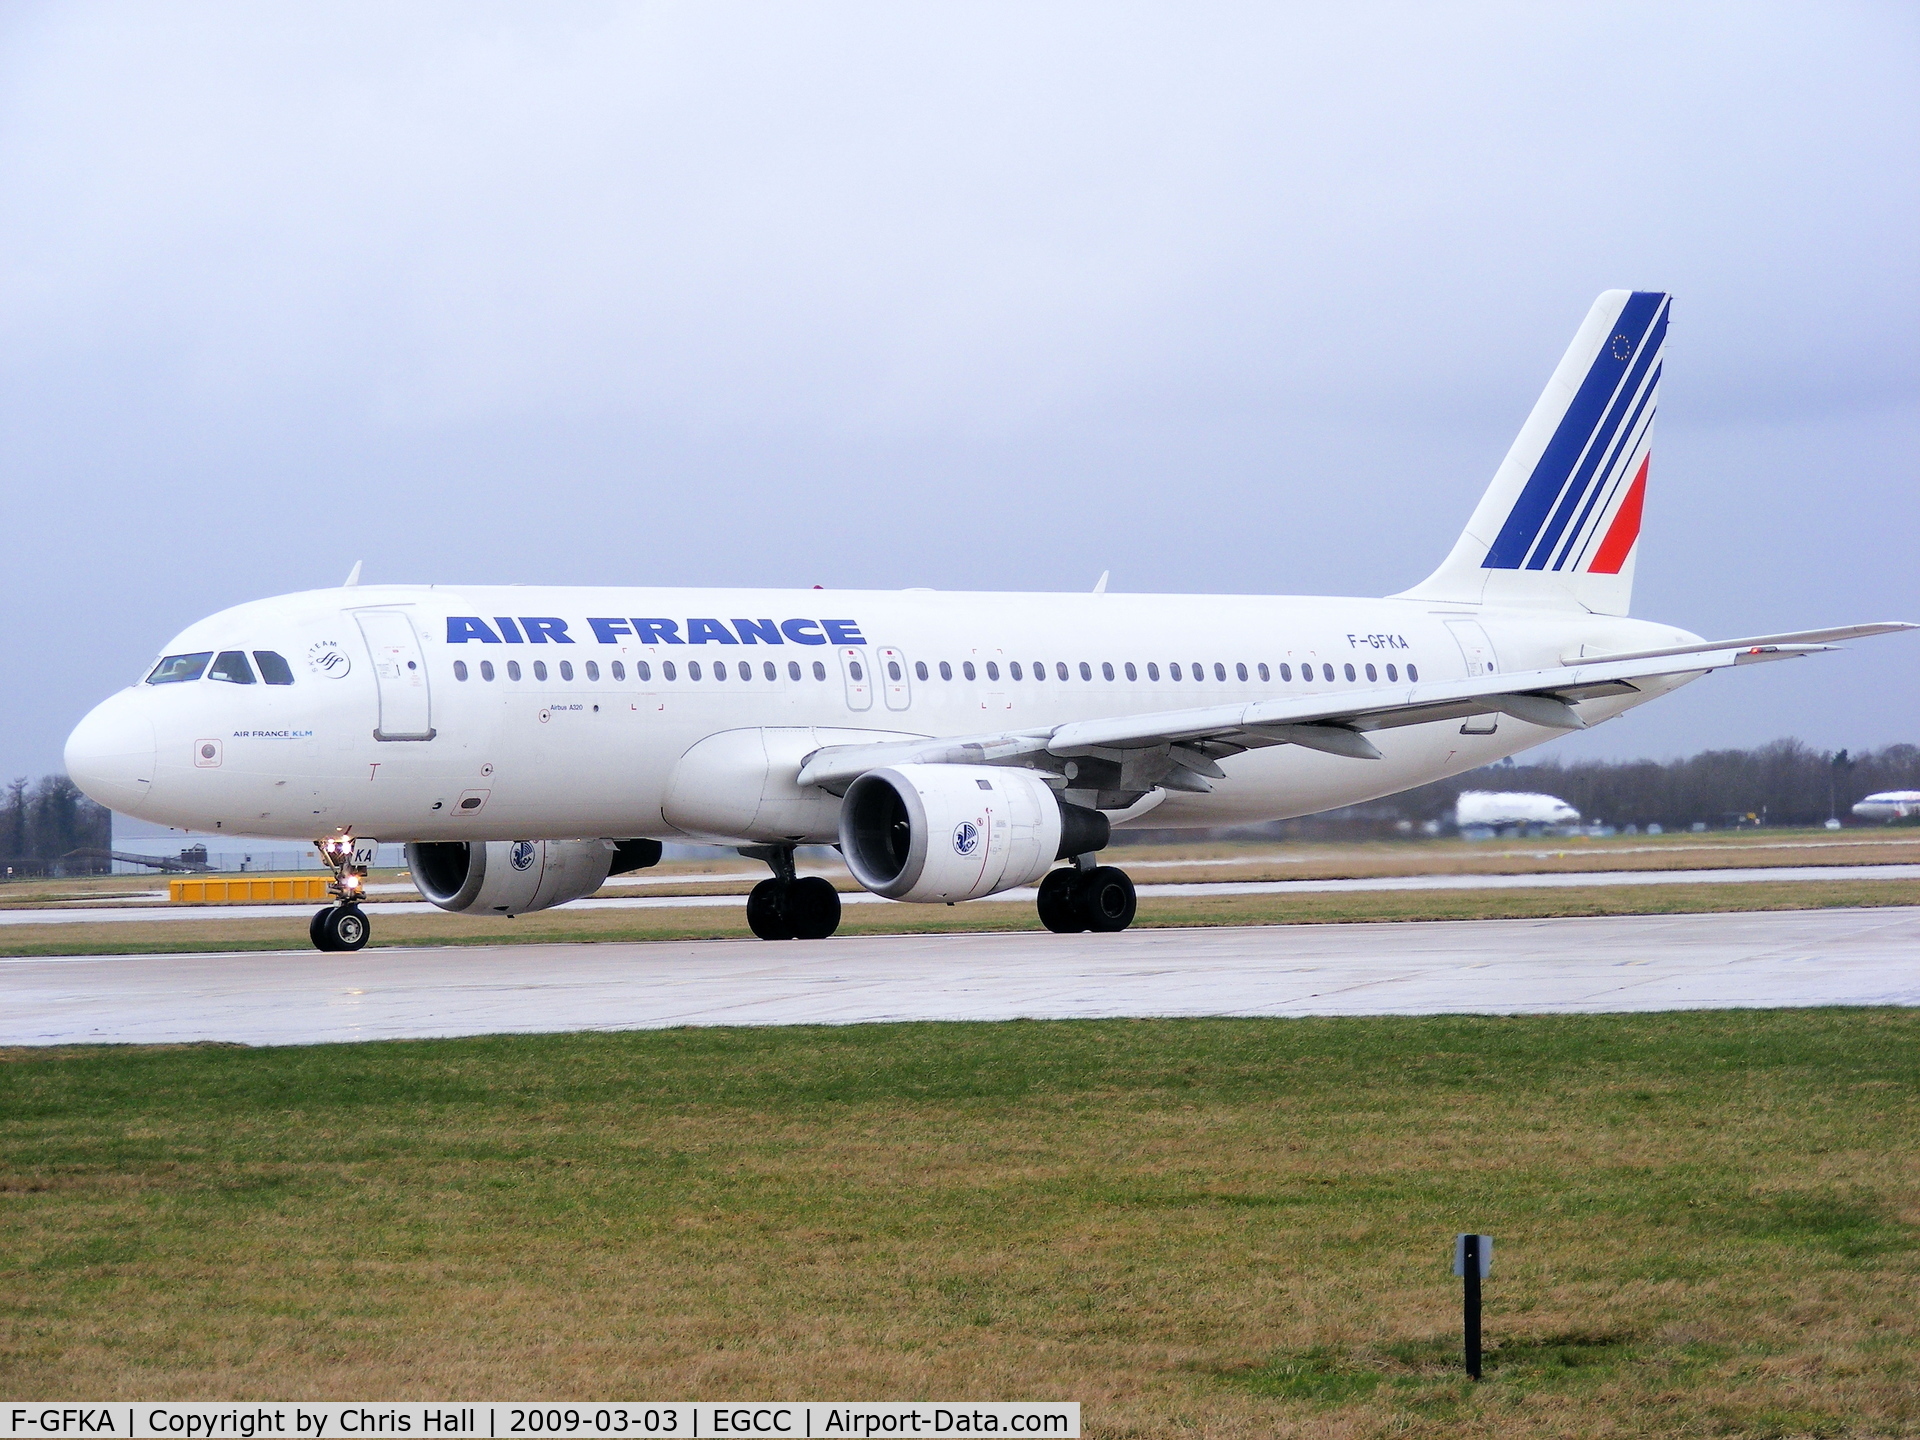 F-GFKA, 1987 Airbus A320-111 C/N 005, Air France